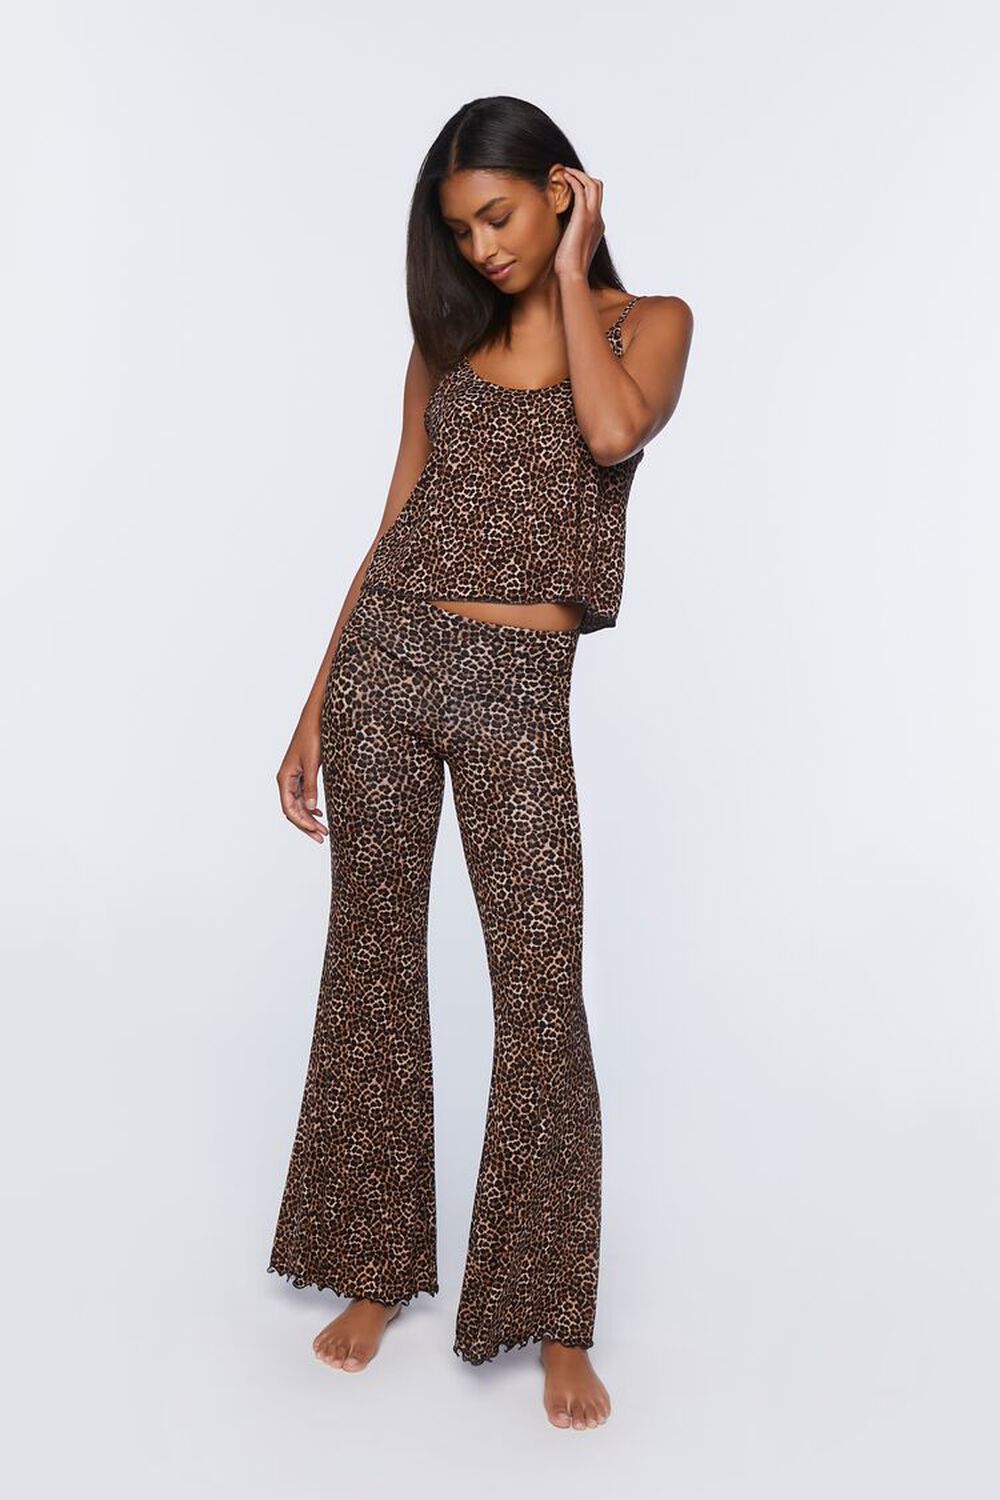 TAN/BLACK Leopard Print Pajama Pants, image 1